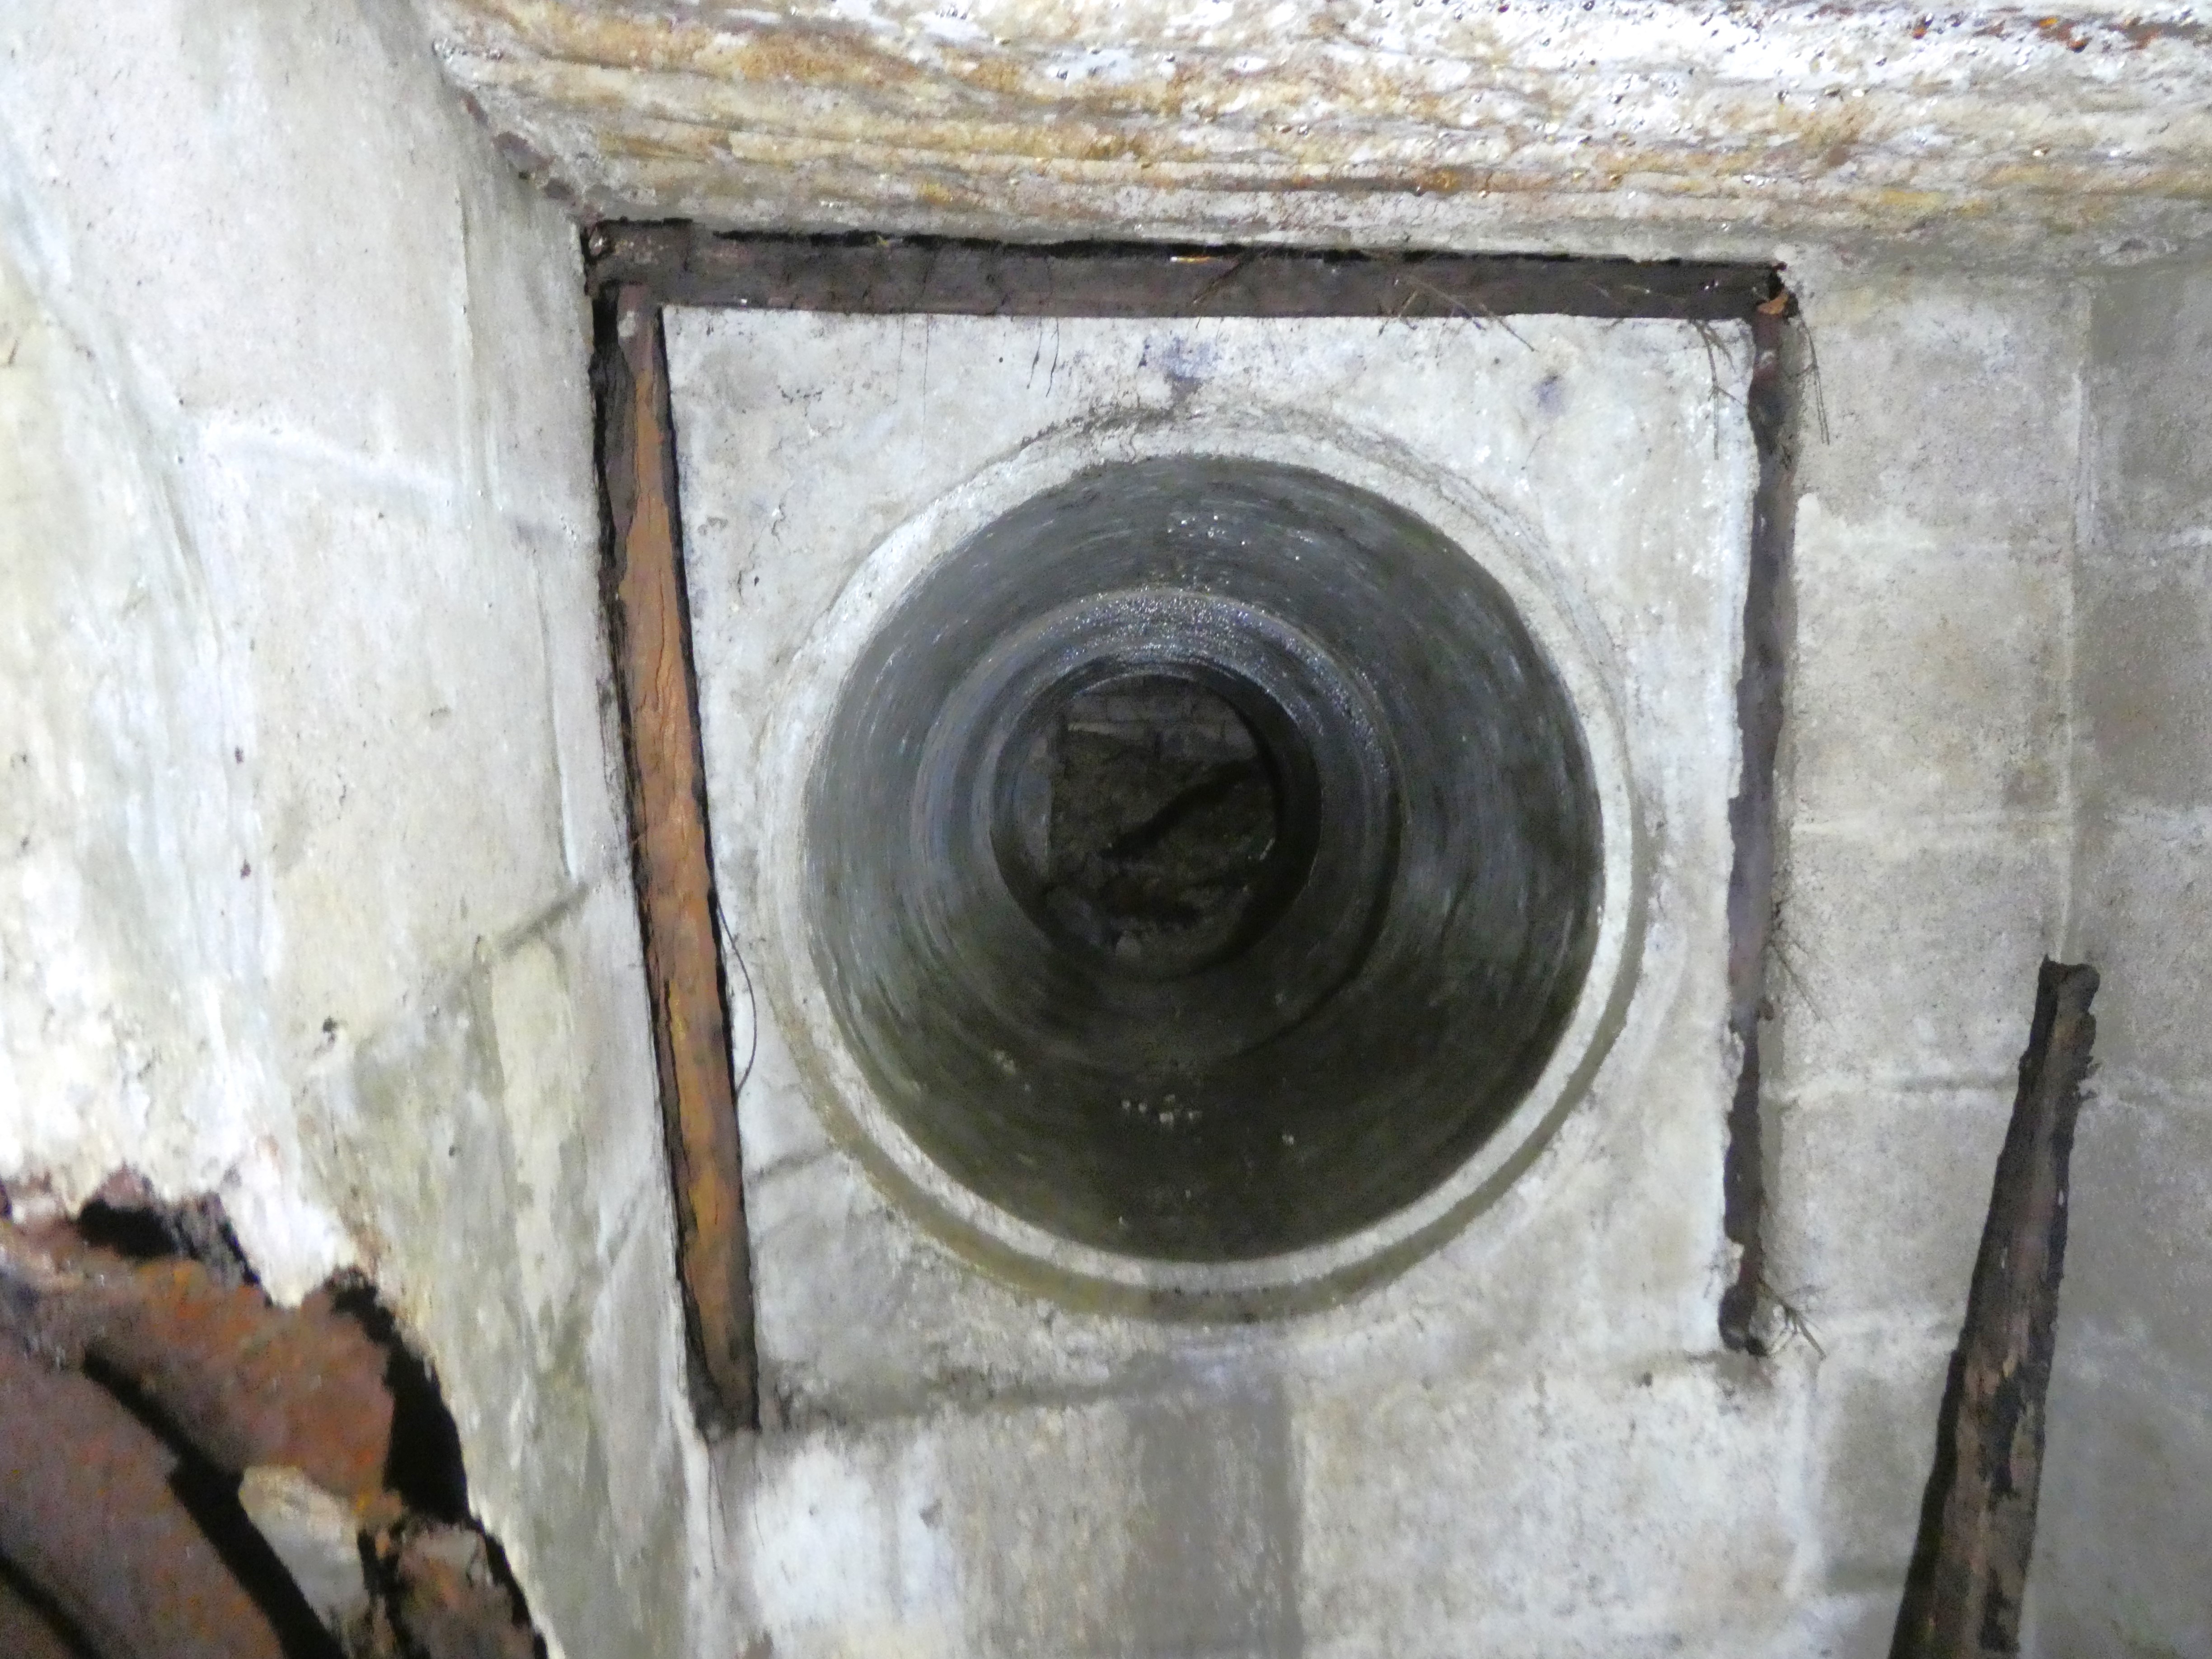 Marksbury escape tunnel with batten